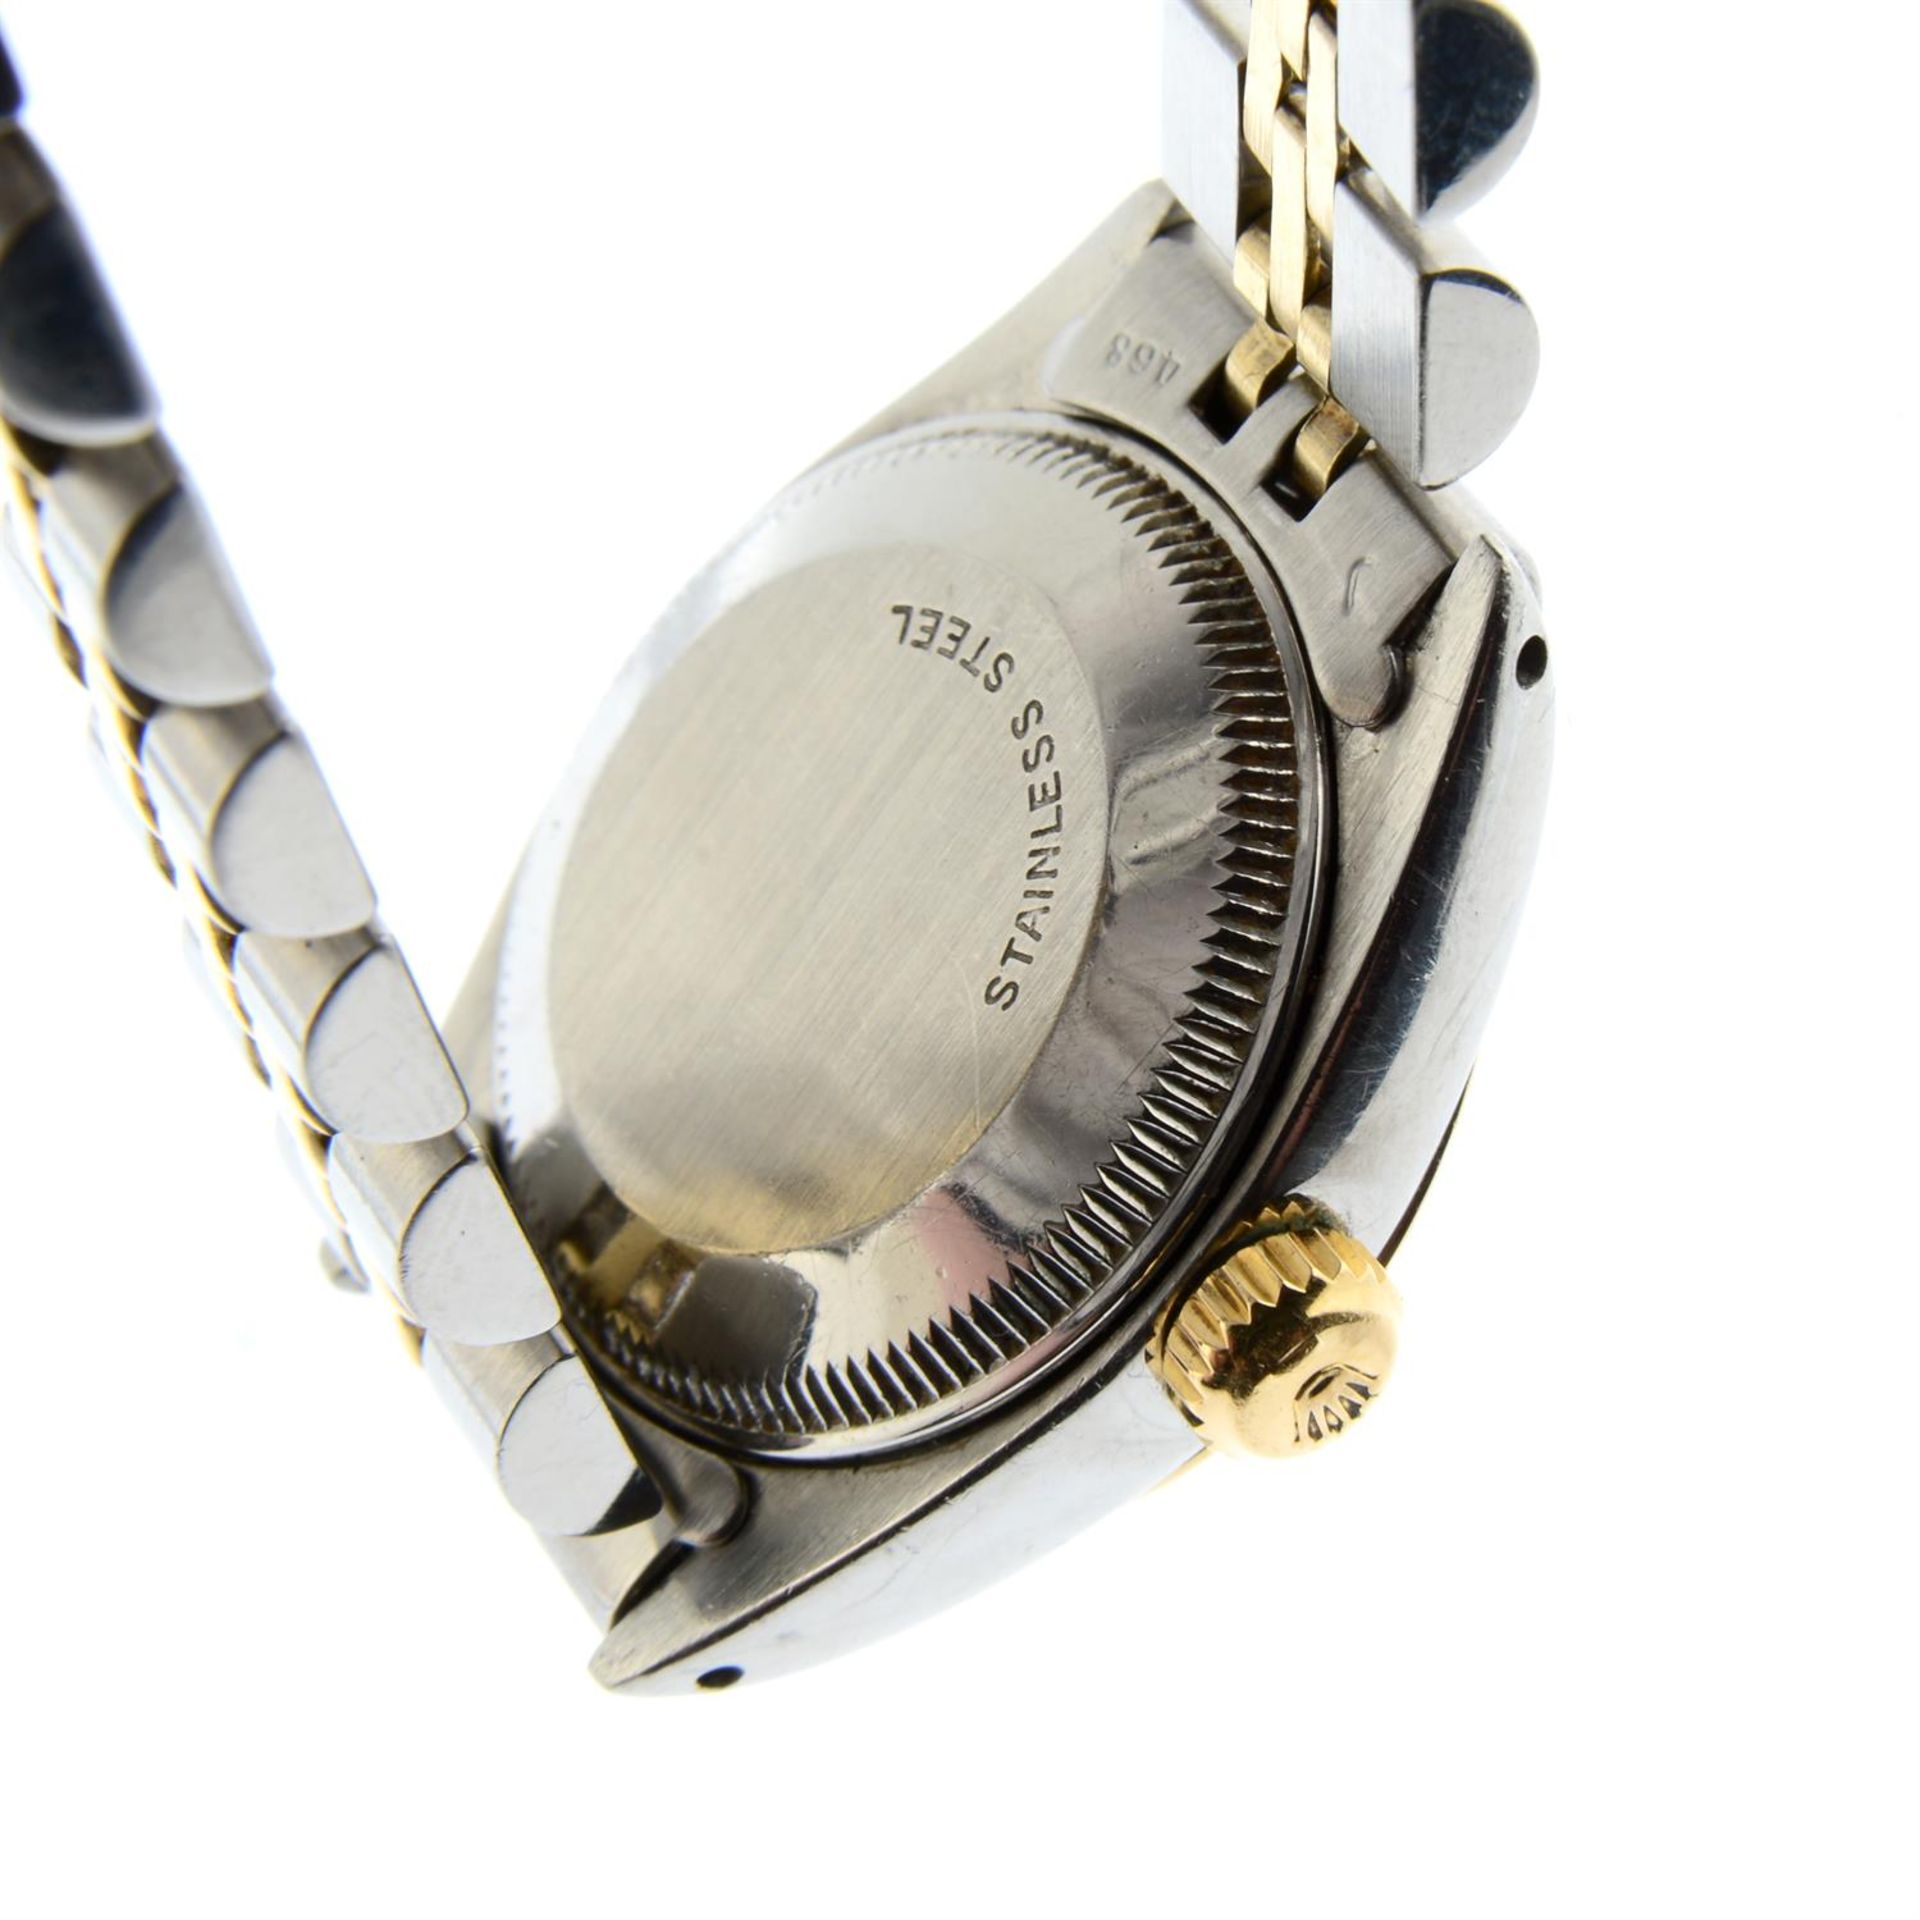 ROLEX - a bi-metal Oyster Perpetual Date bracelet watch, 26mm. - Image 2 of 5